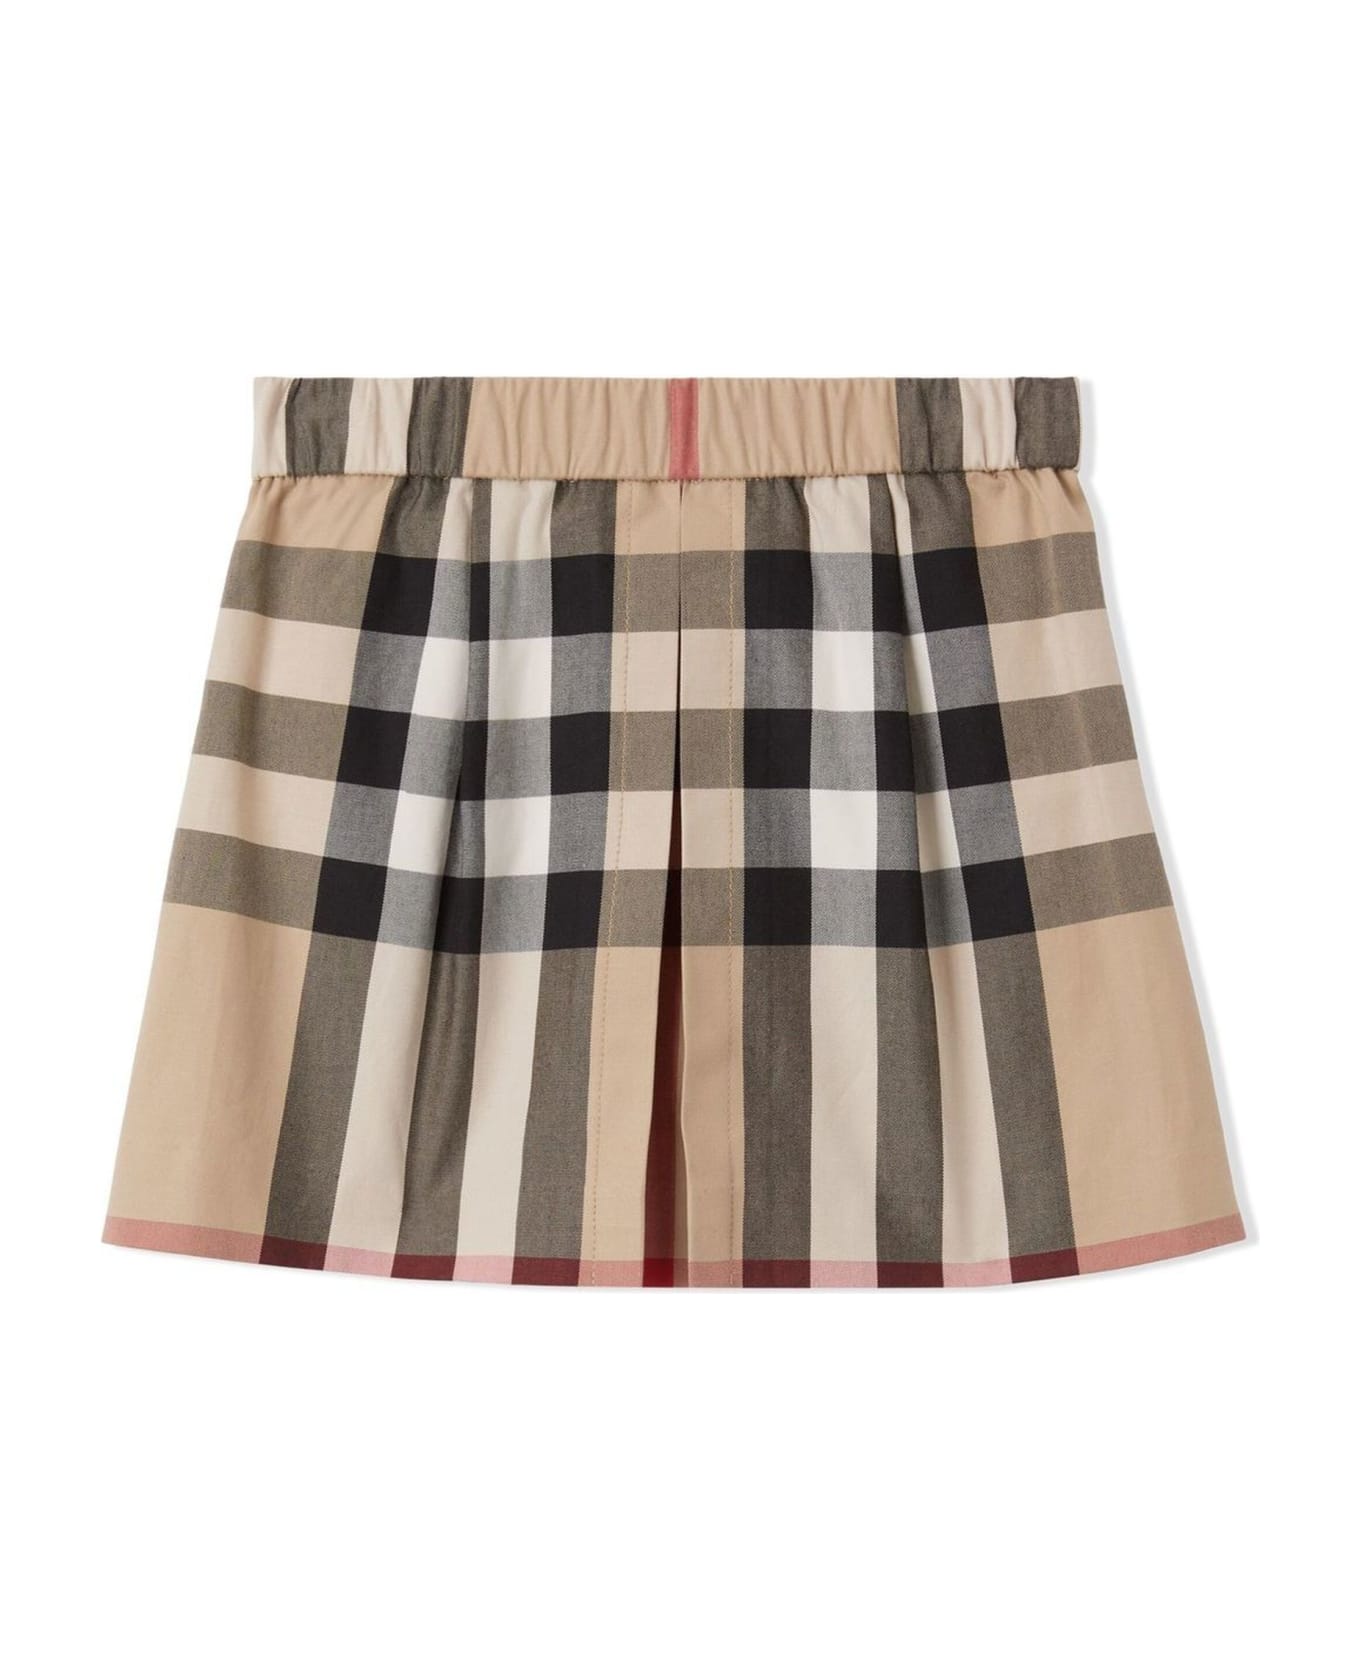 Burberry Beige Cotton Blend Skirt - Beige